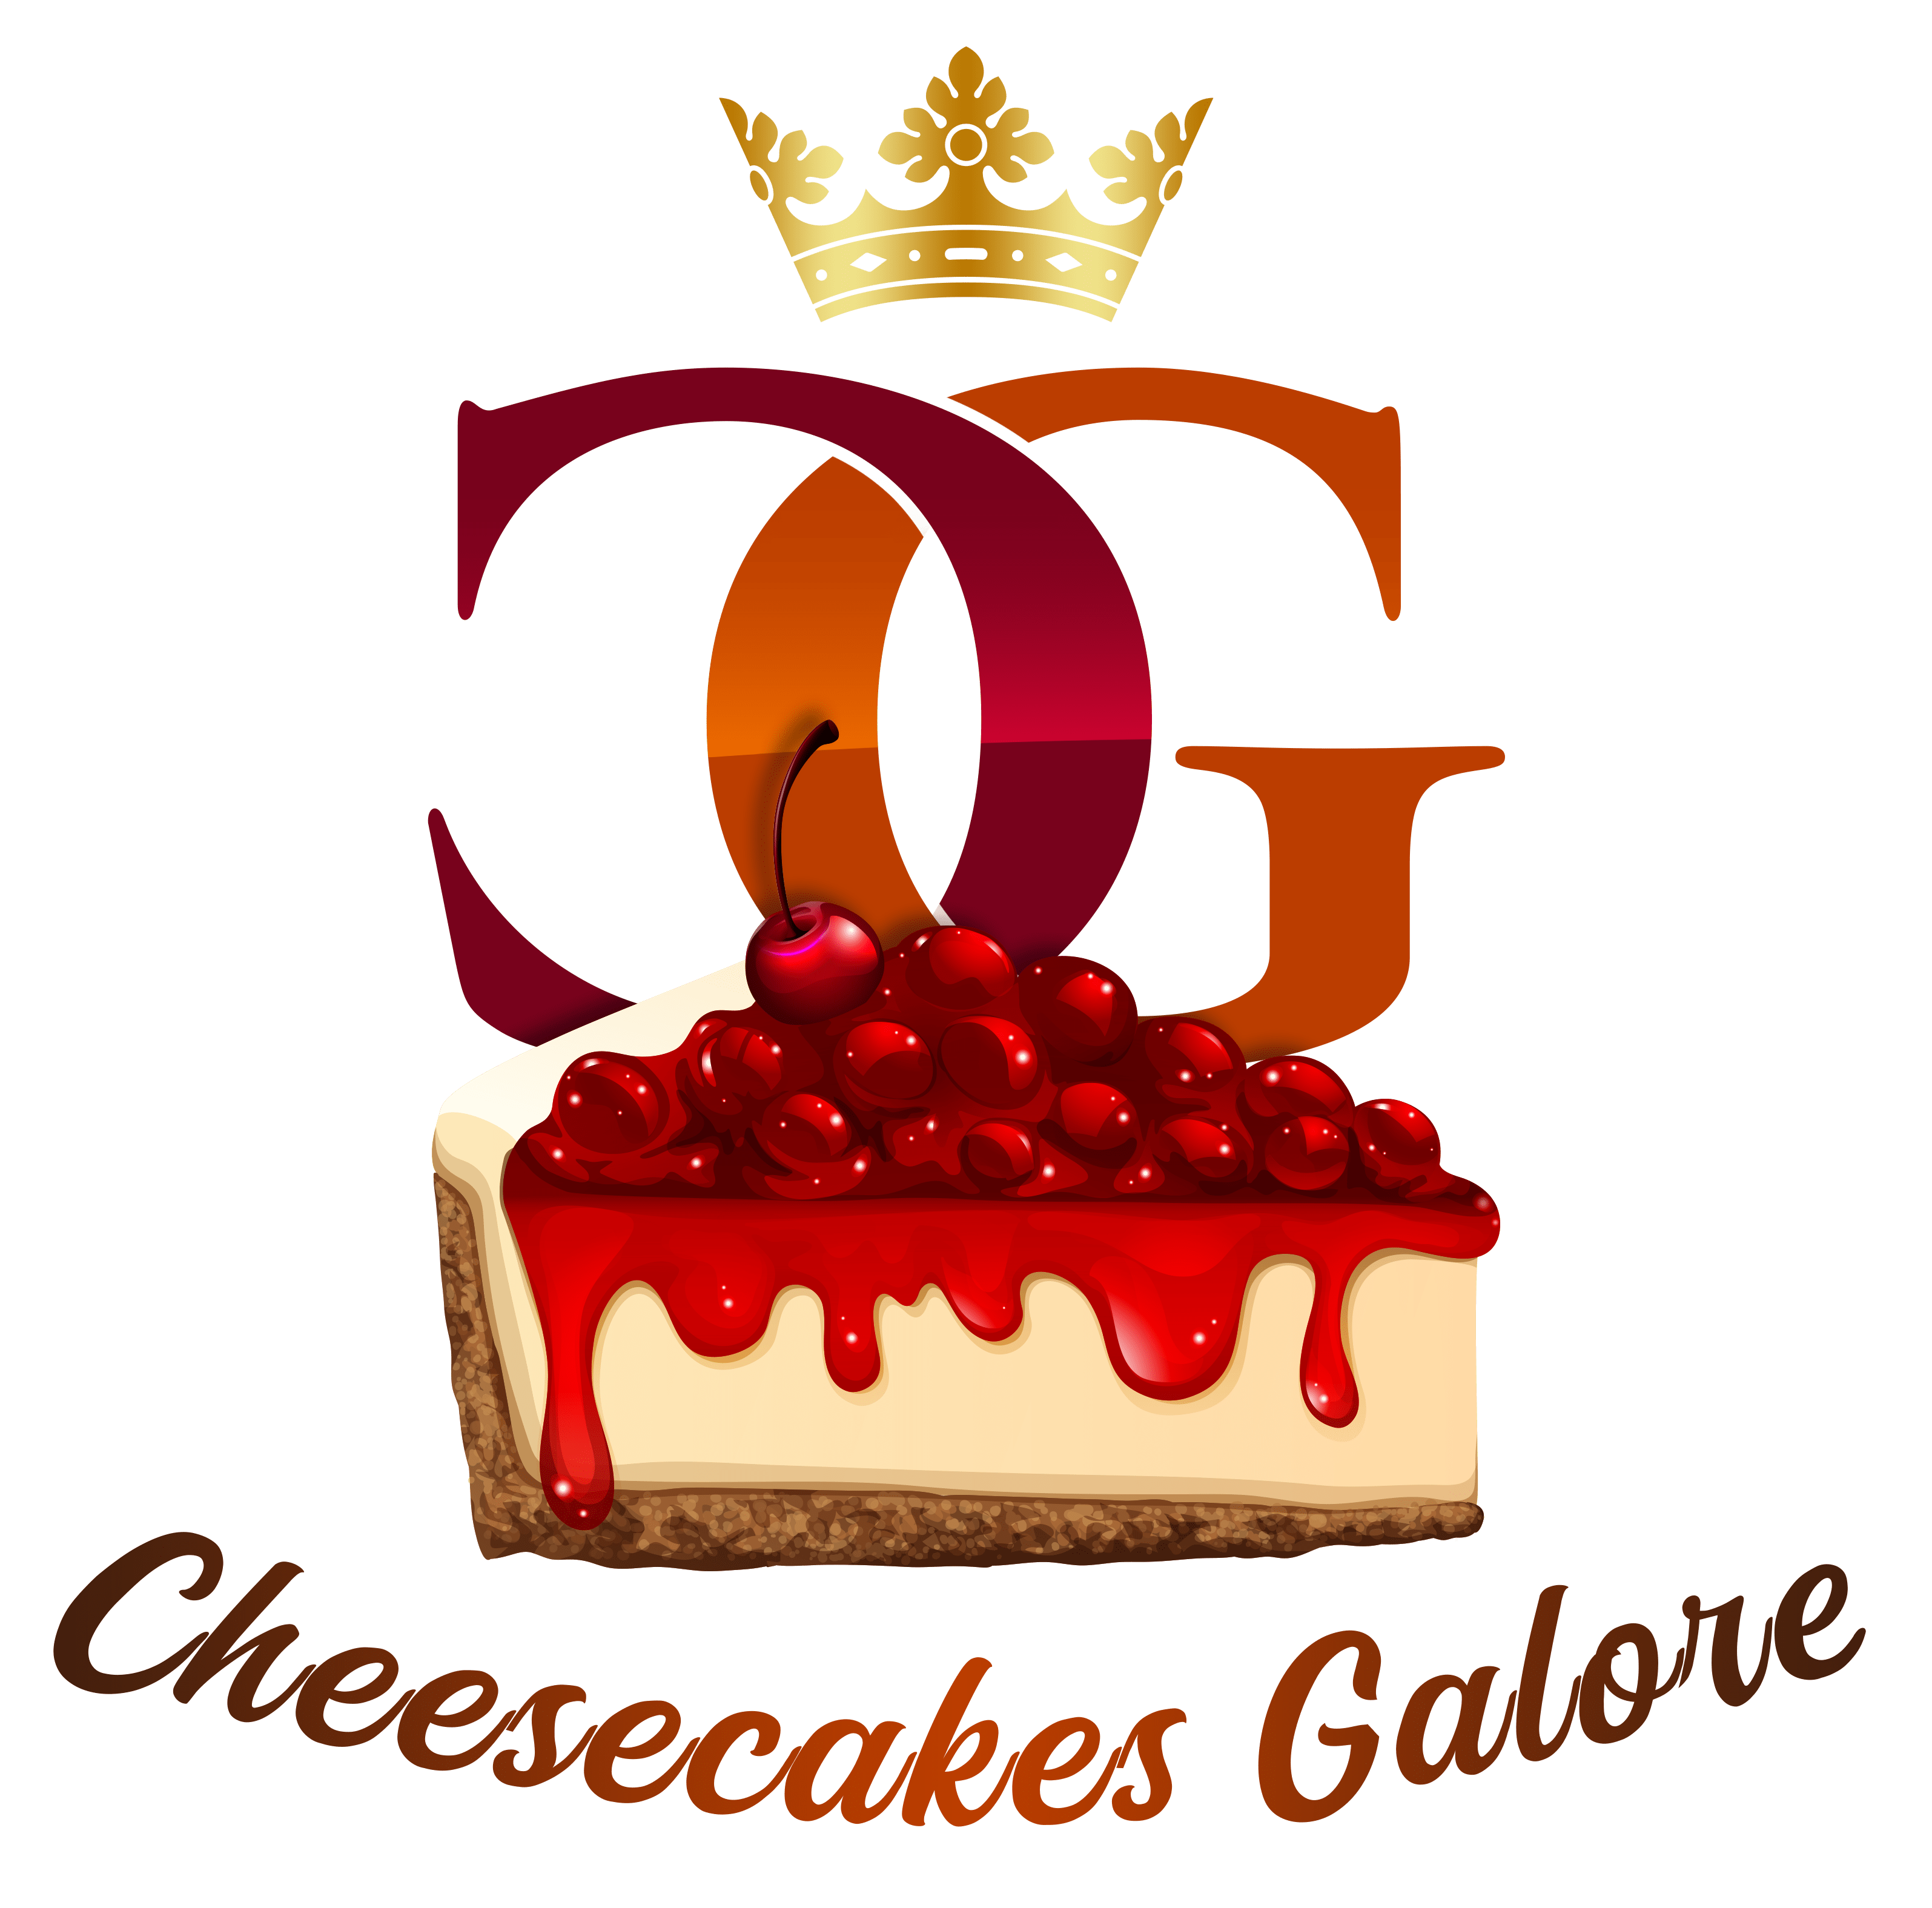 Cheesecakes Galore Logo Hi-Res